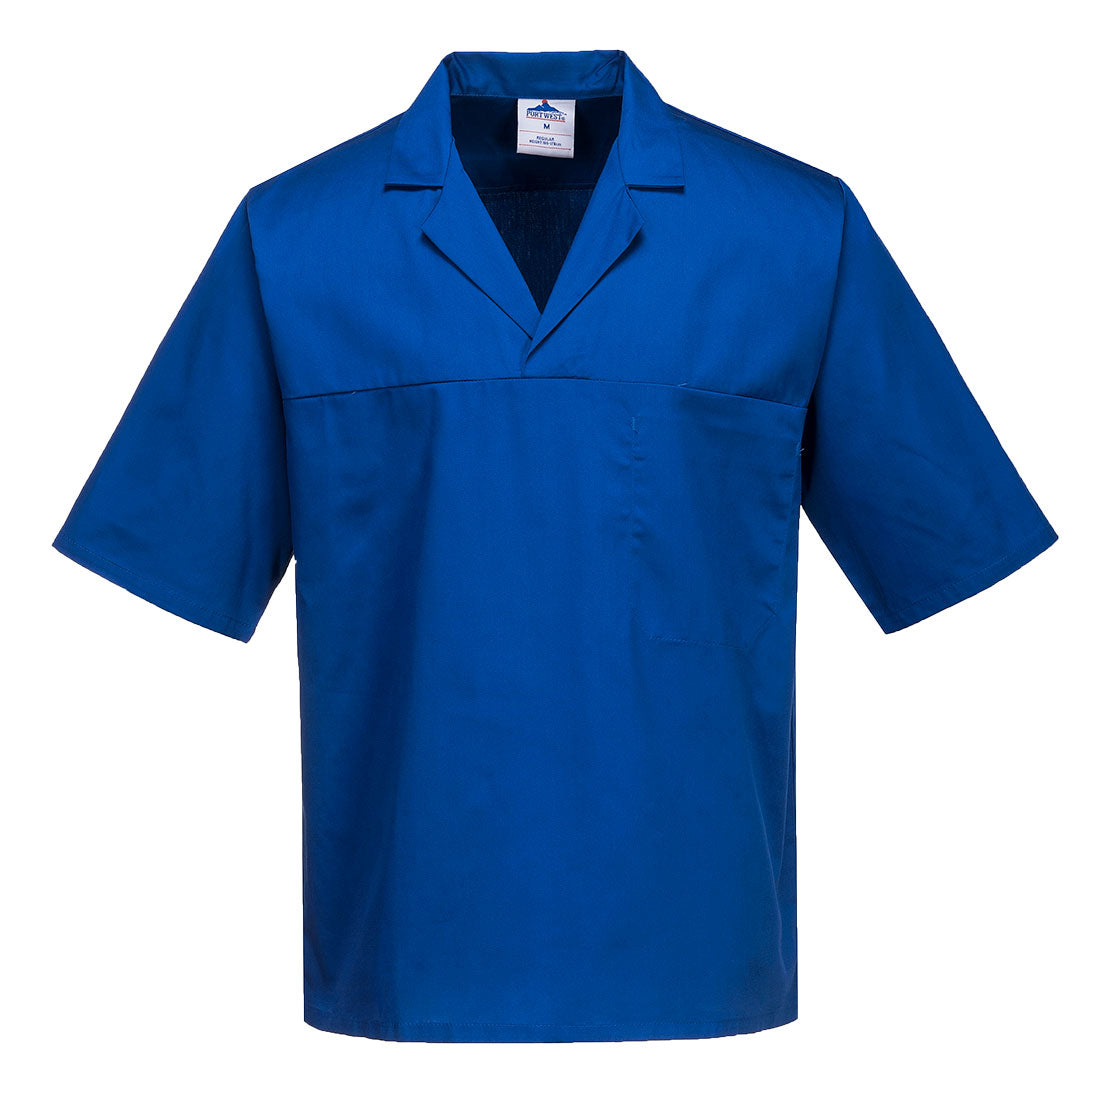 Portwest 2209 - Royal Blue Food Industry Short Sleeve Baker Shirt sz Medium Regular